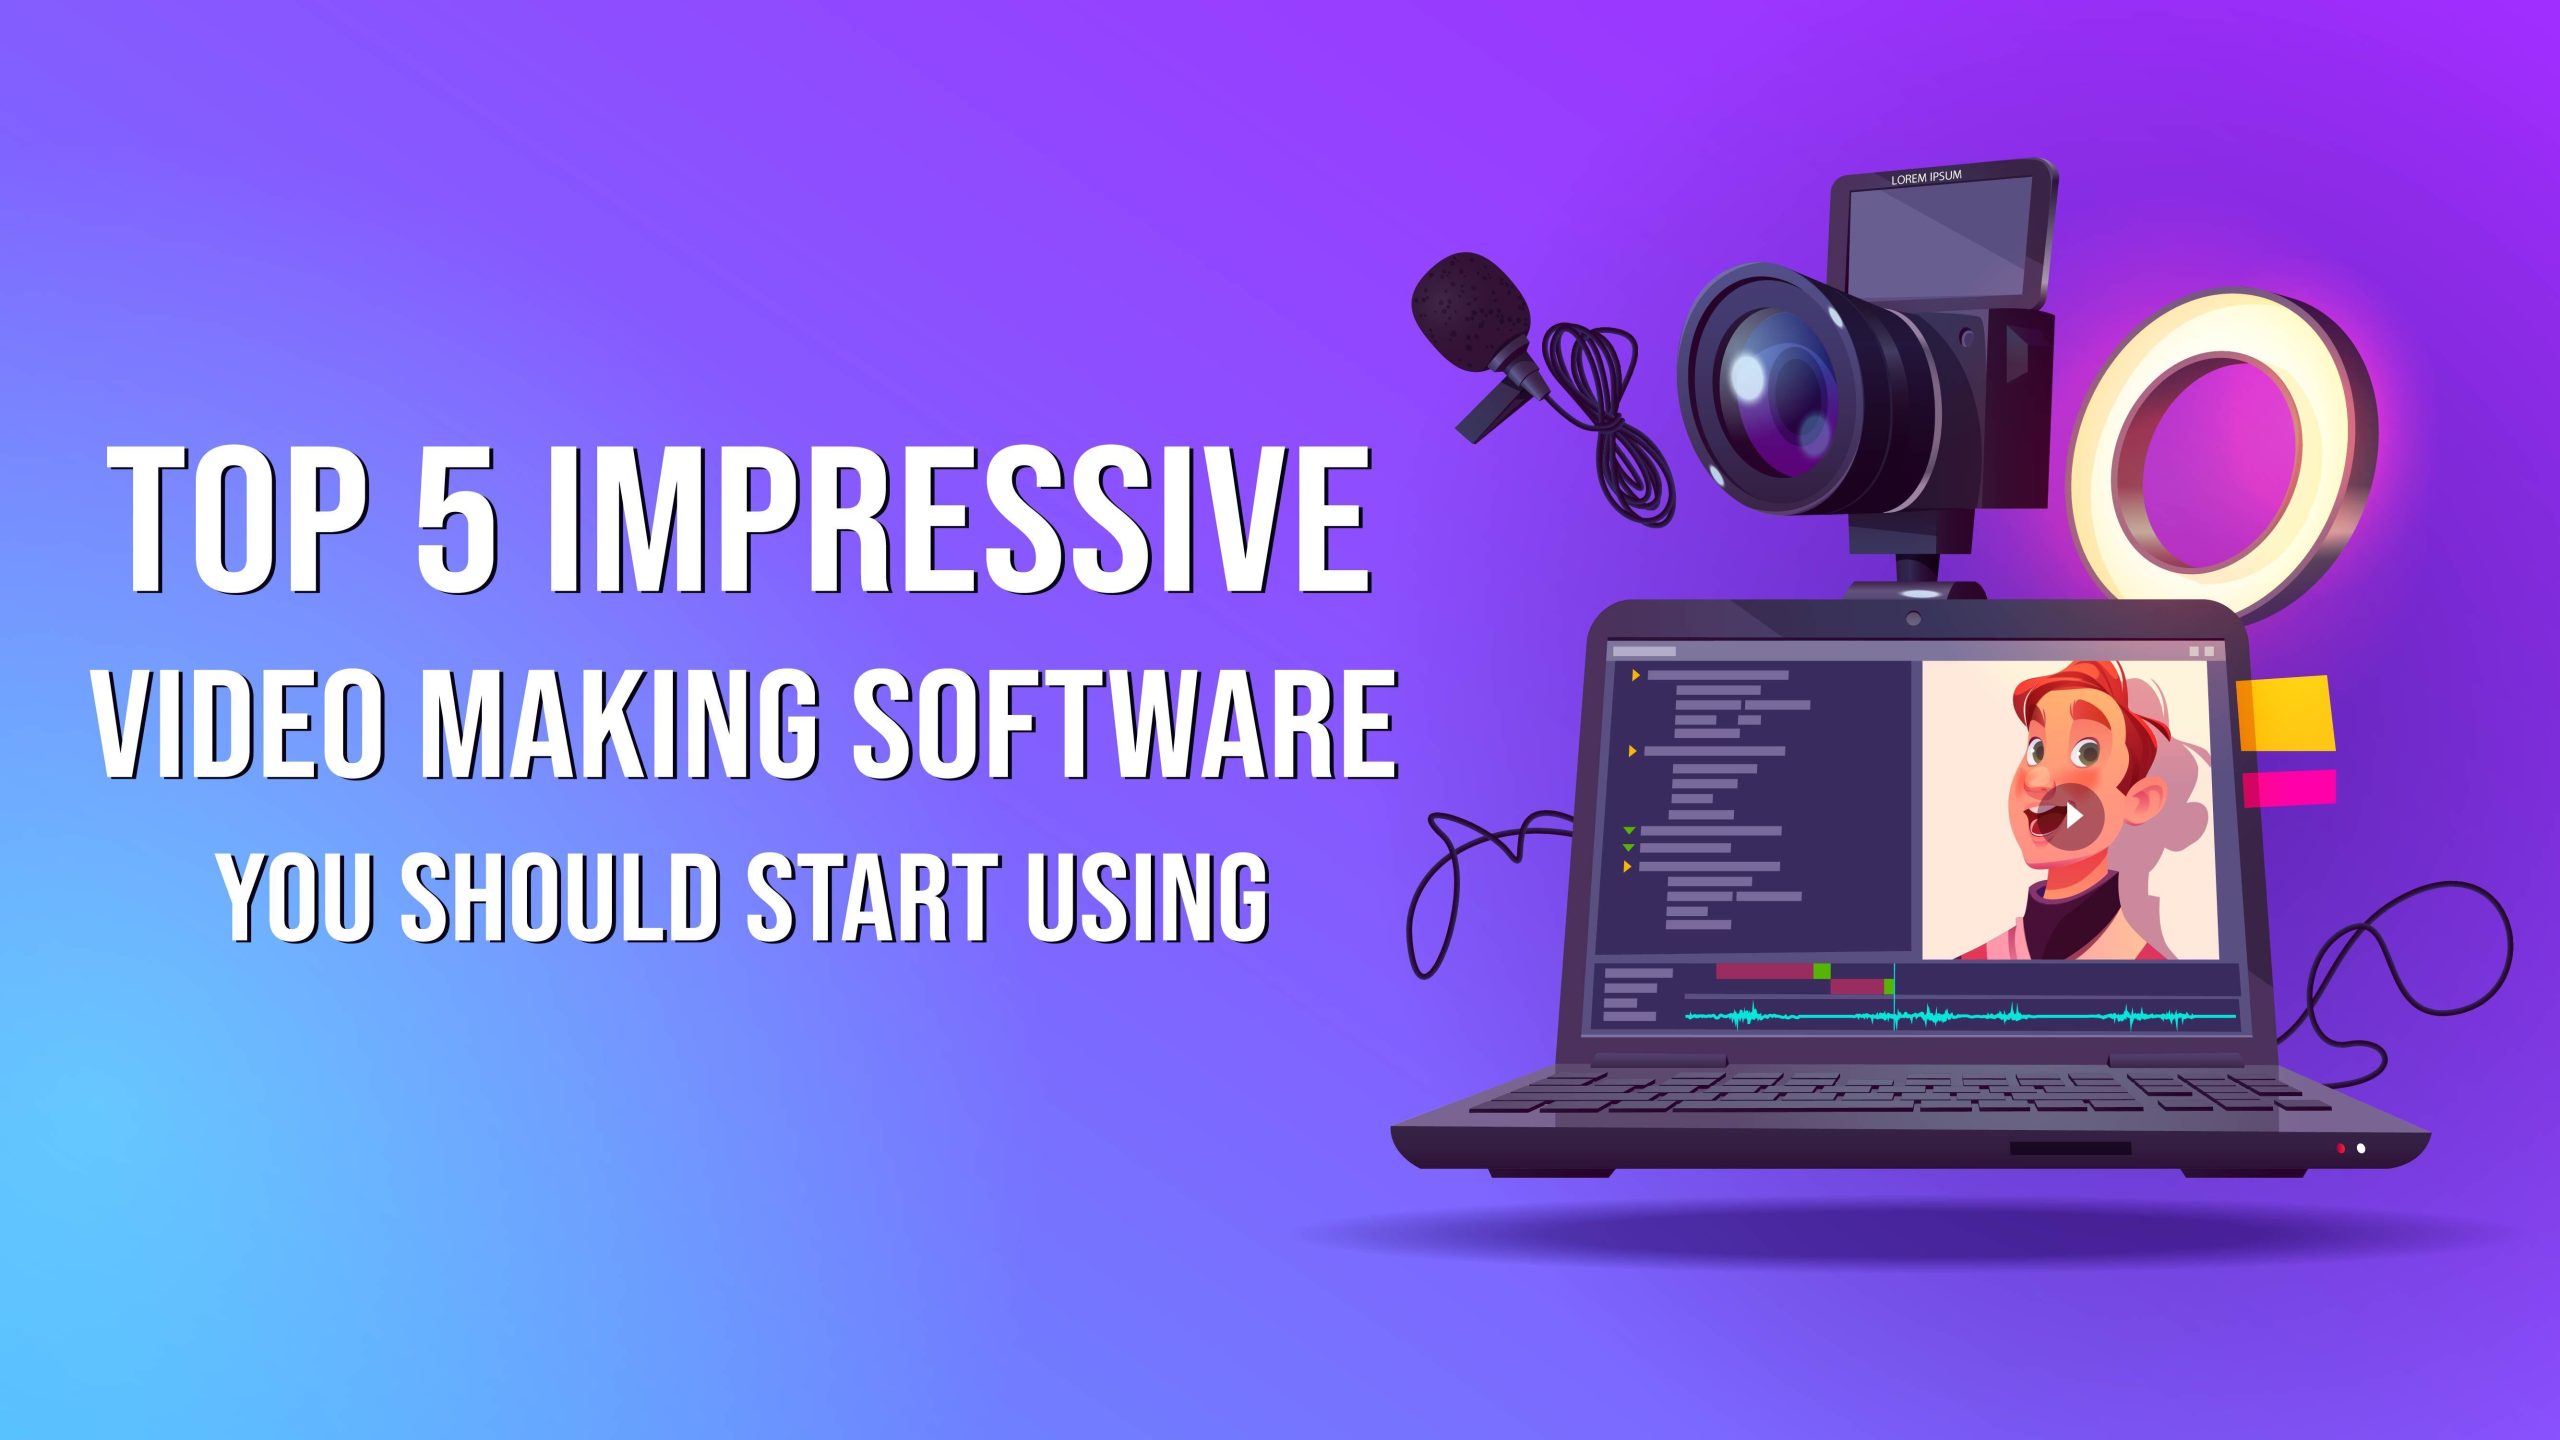 Top 5 Impressive Video Making Software You Should Start Using